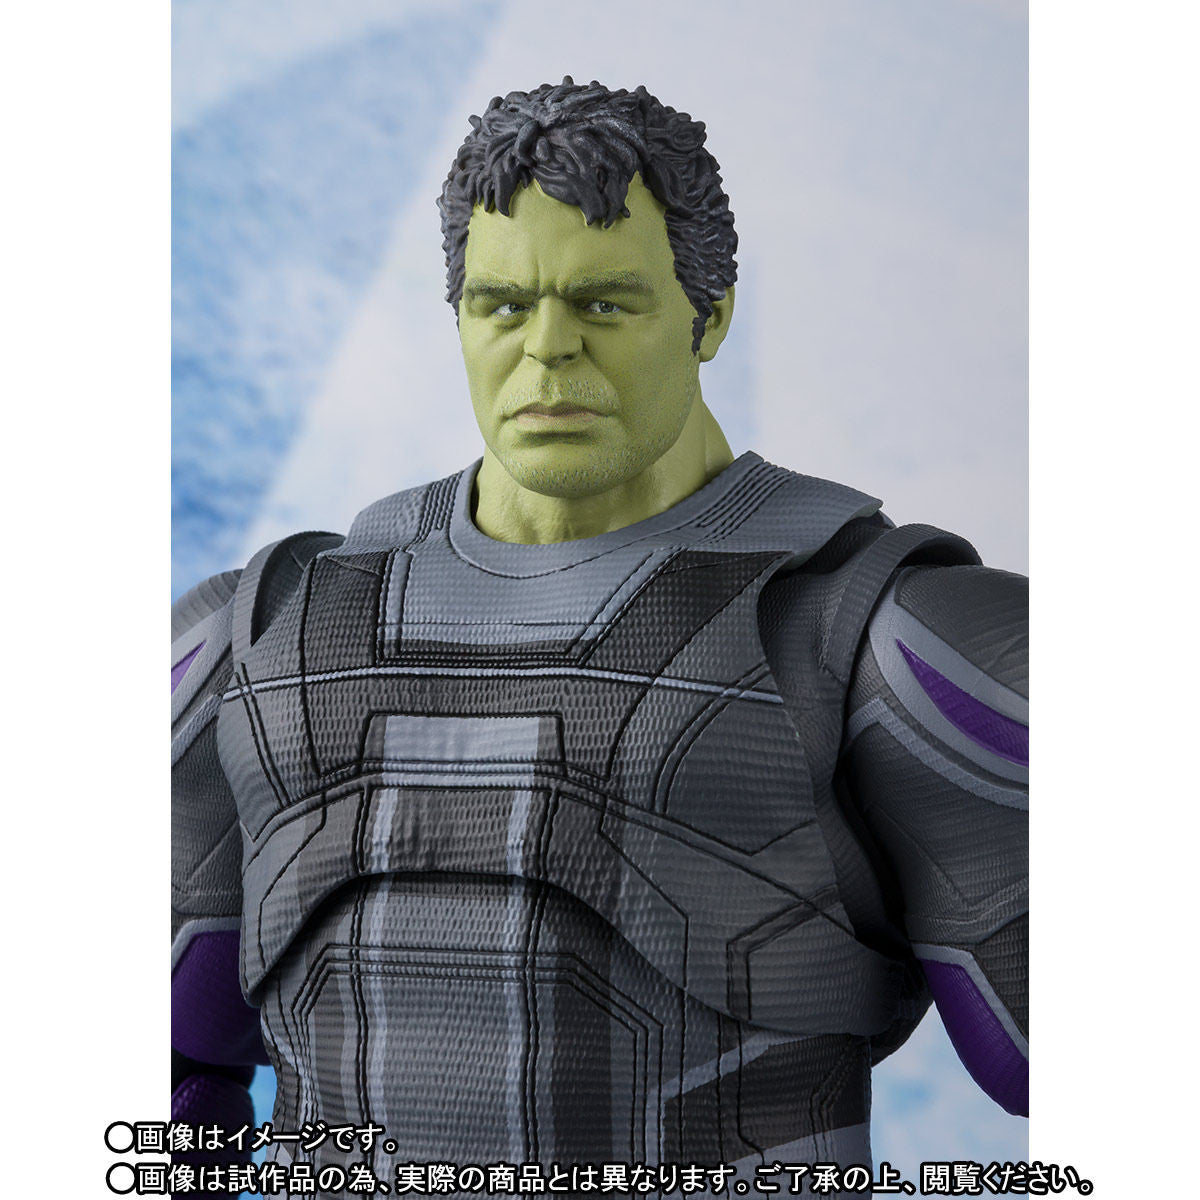 S.H. Figuarts Hulk (Bruce Banner) Avengers: Endgame Action Figure 6